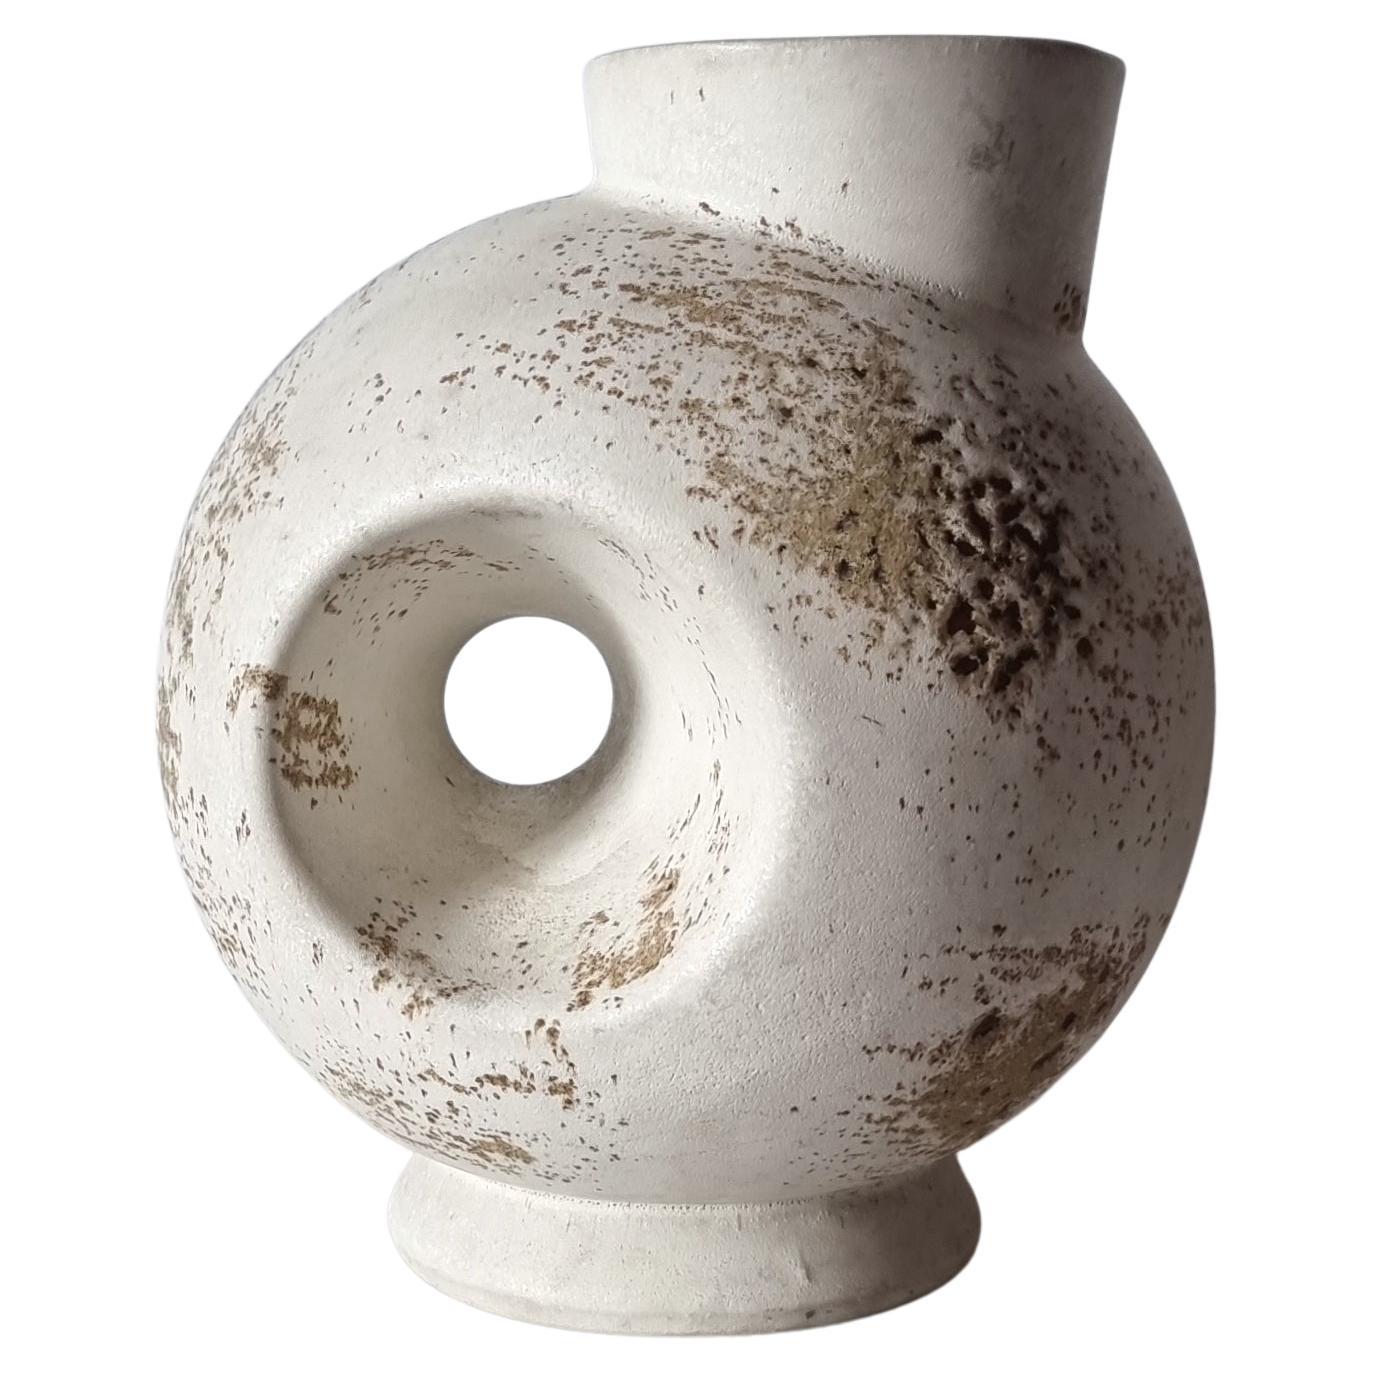 Keramiker-Skulptur-Kugel, Statement-Krug-Vase, Nussbaumfarbene gesprenkelte cremefarbene Glasur